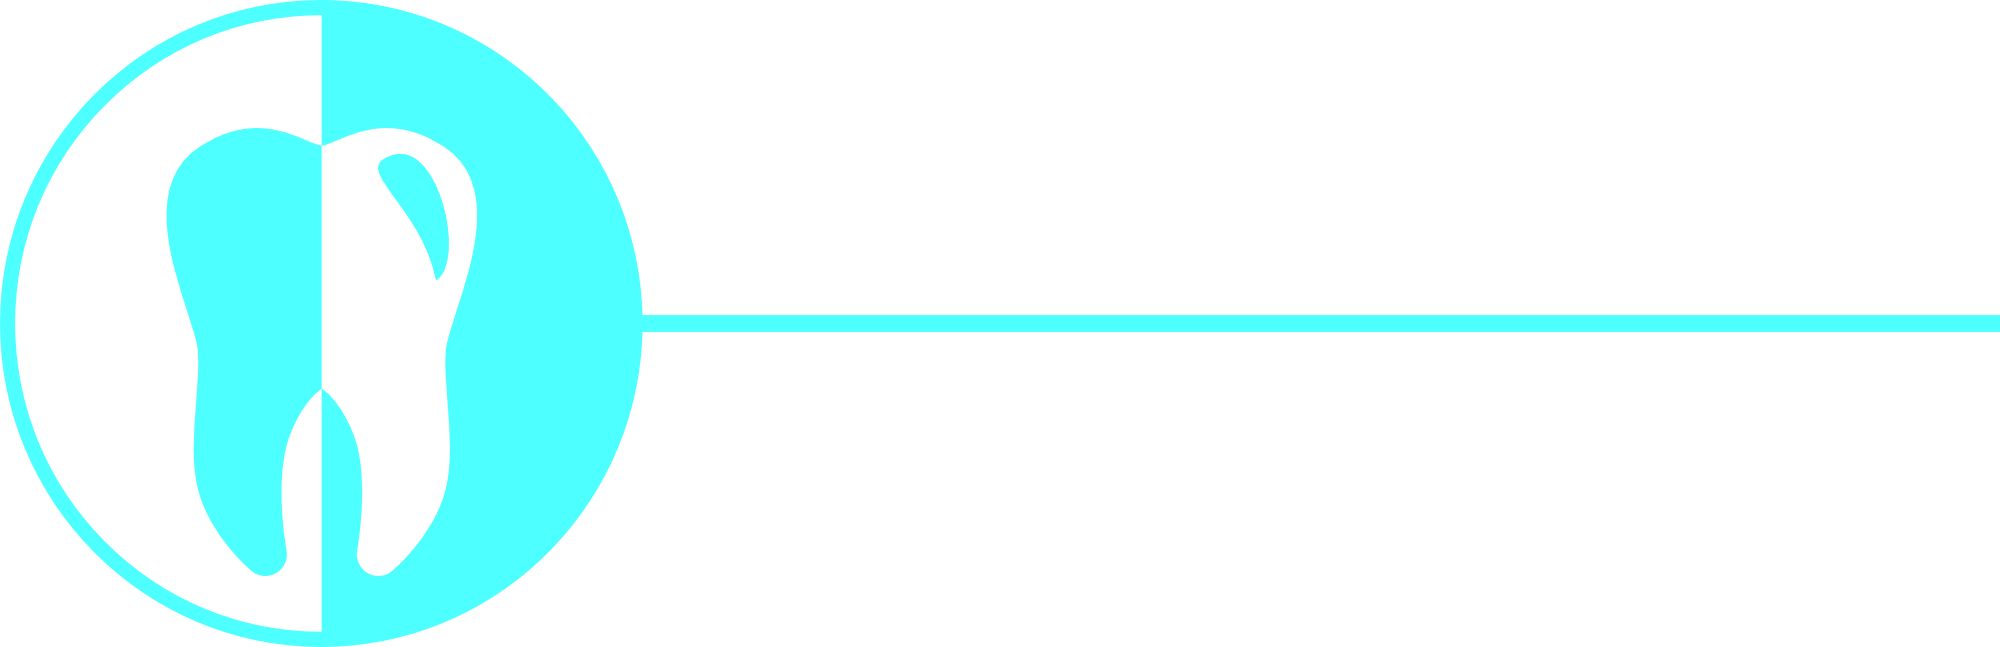 Fusion Dental by Fusion Media Inc.